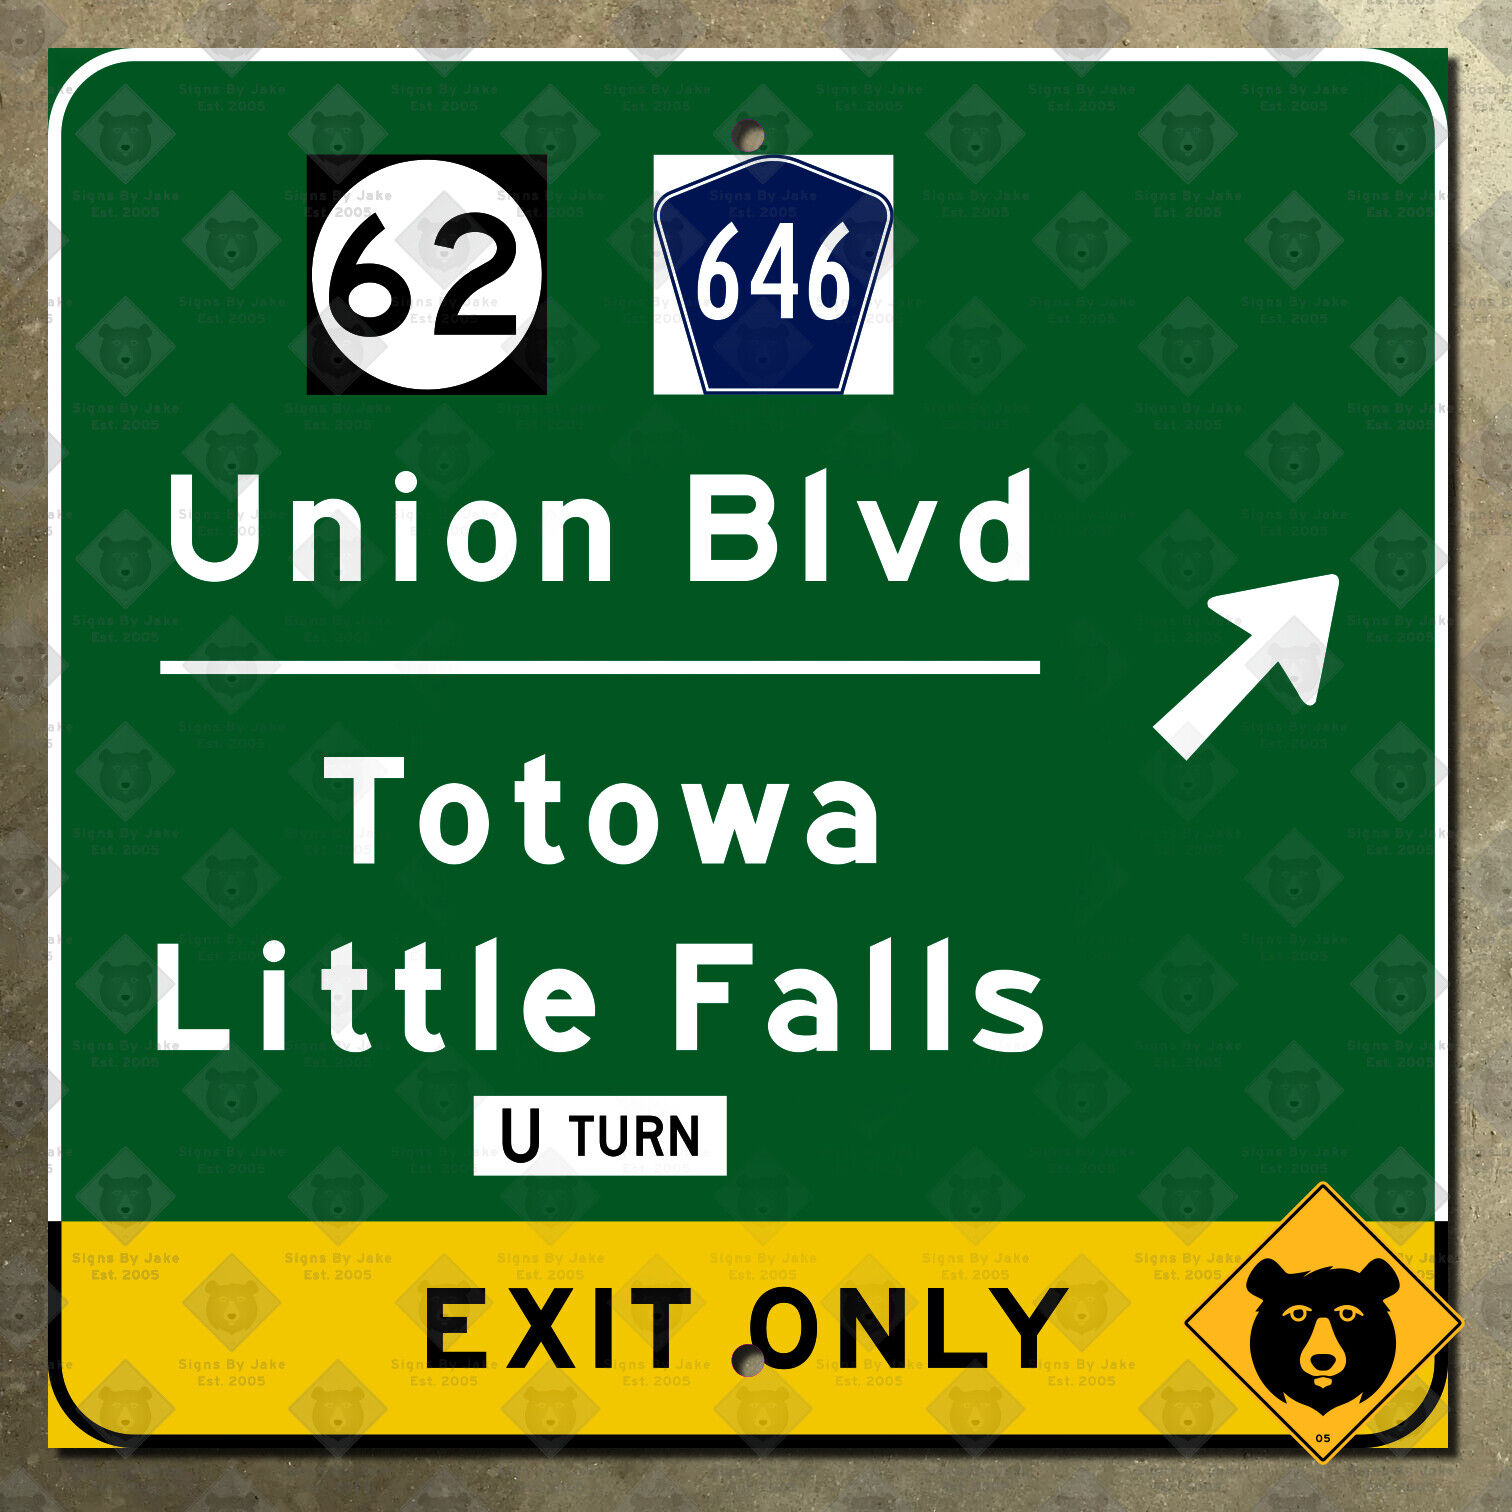 New Jersey route 62 Passaic county 646 Union Blvd Totowa Little Falls sign 16x16